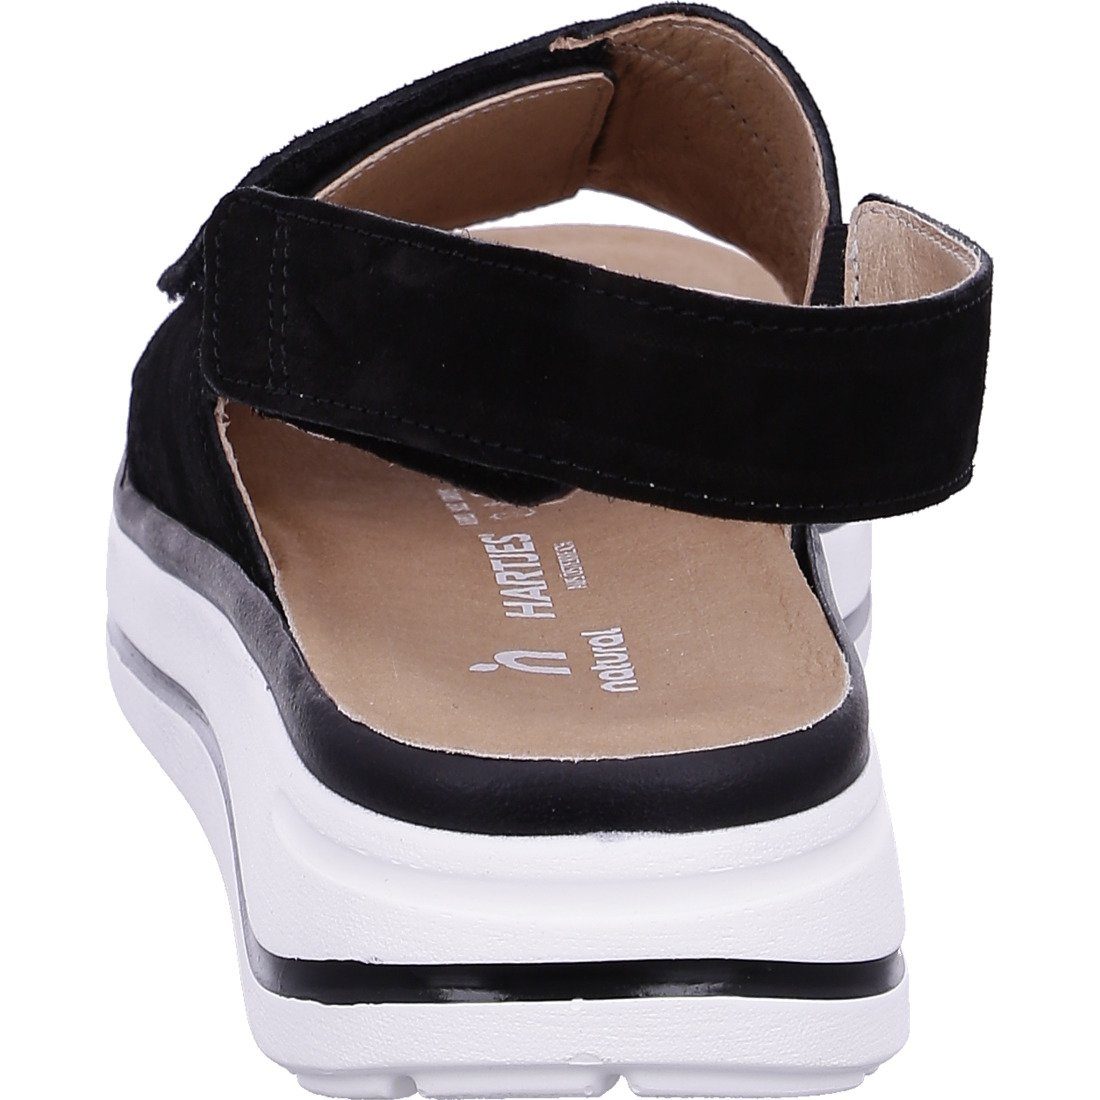 Schuhe, Sandalette Sandalette 048741 Hartjes Hartjes - Woogie Damen schwarz Leder